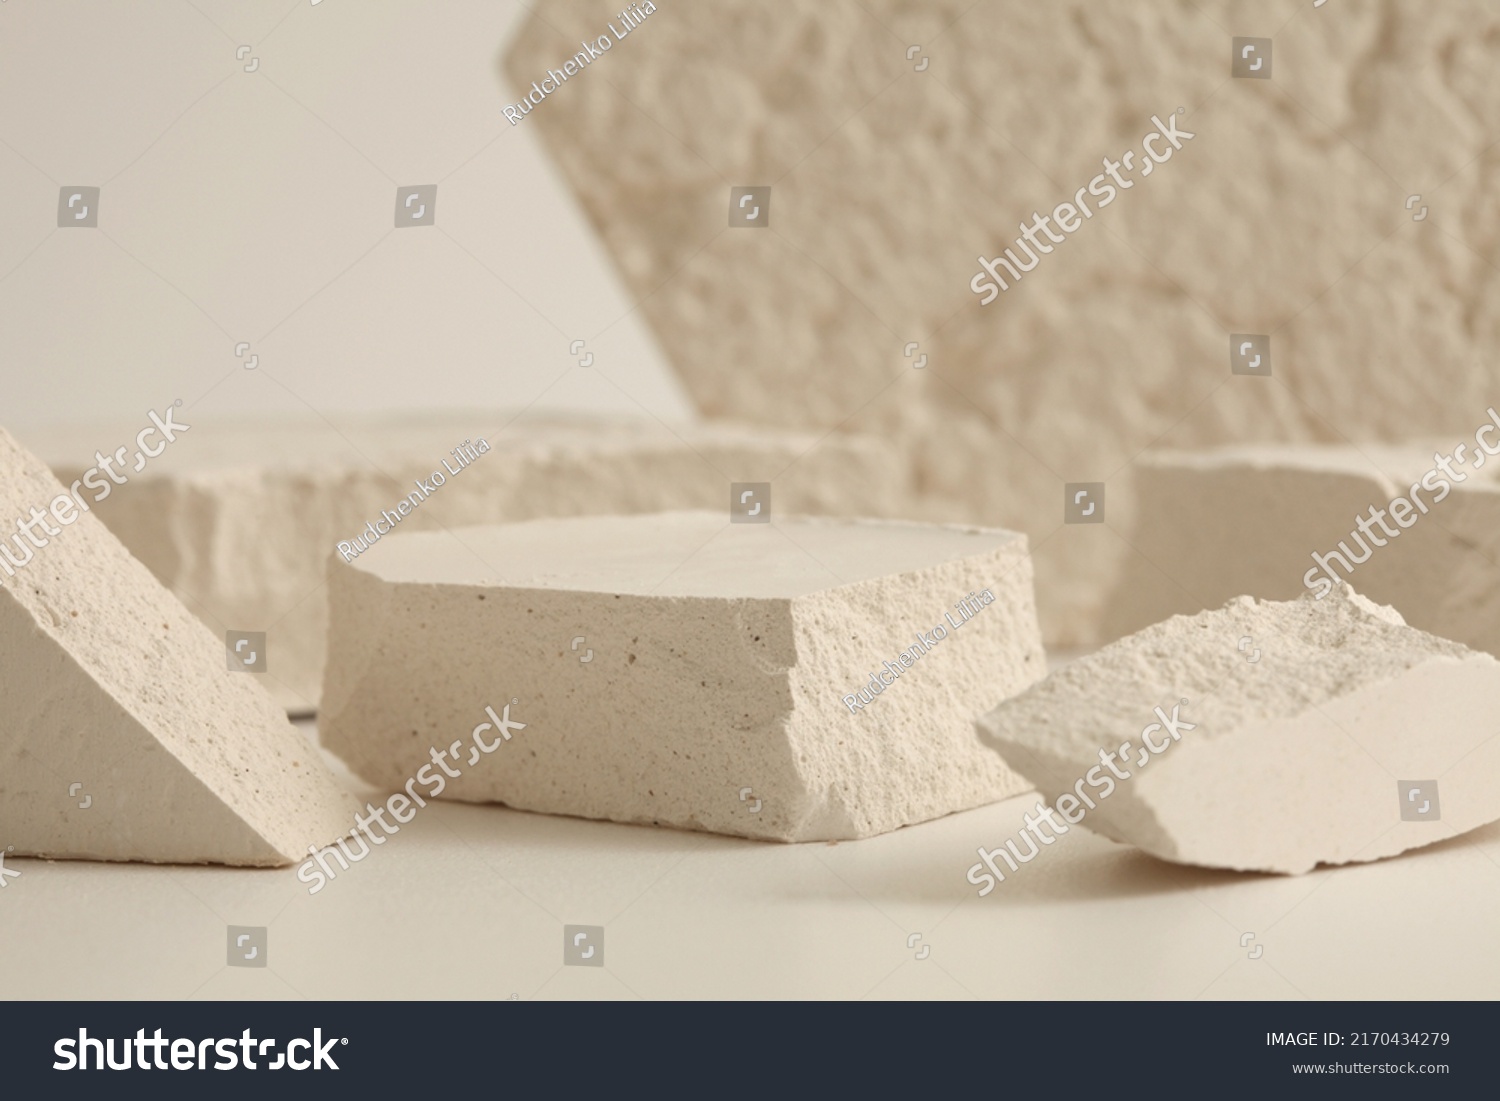 Empty gypsum stone platform eco podium on beige copy space background. Minimal still life display product presentation scene. #2170434279